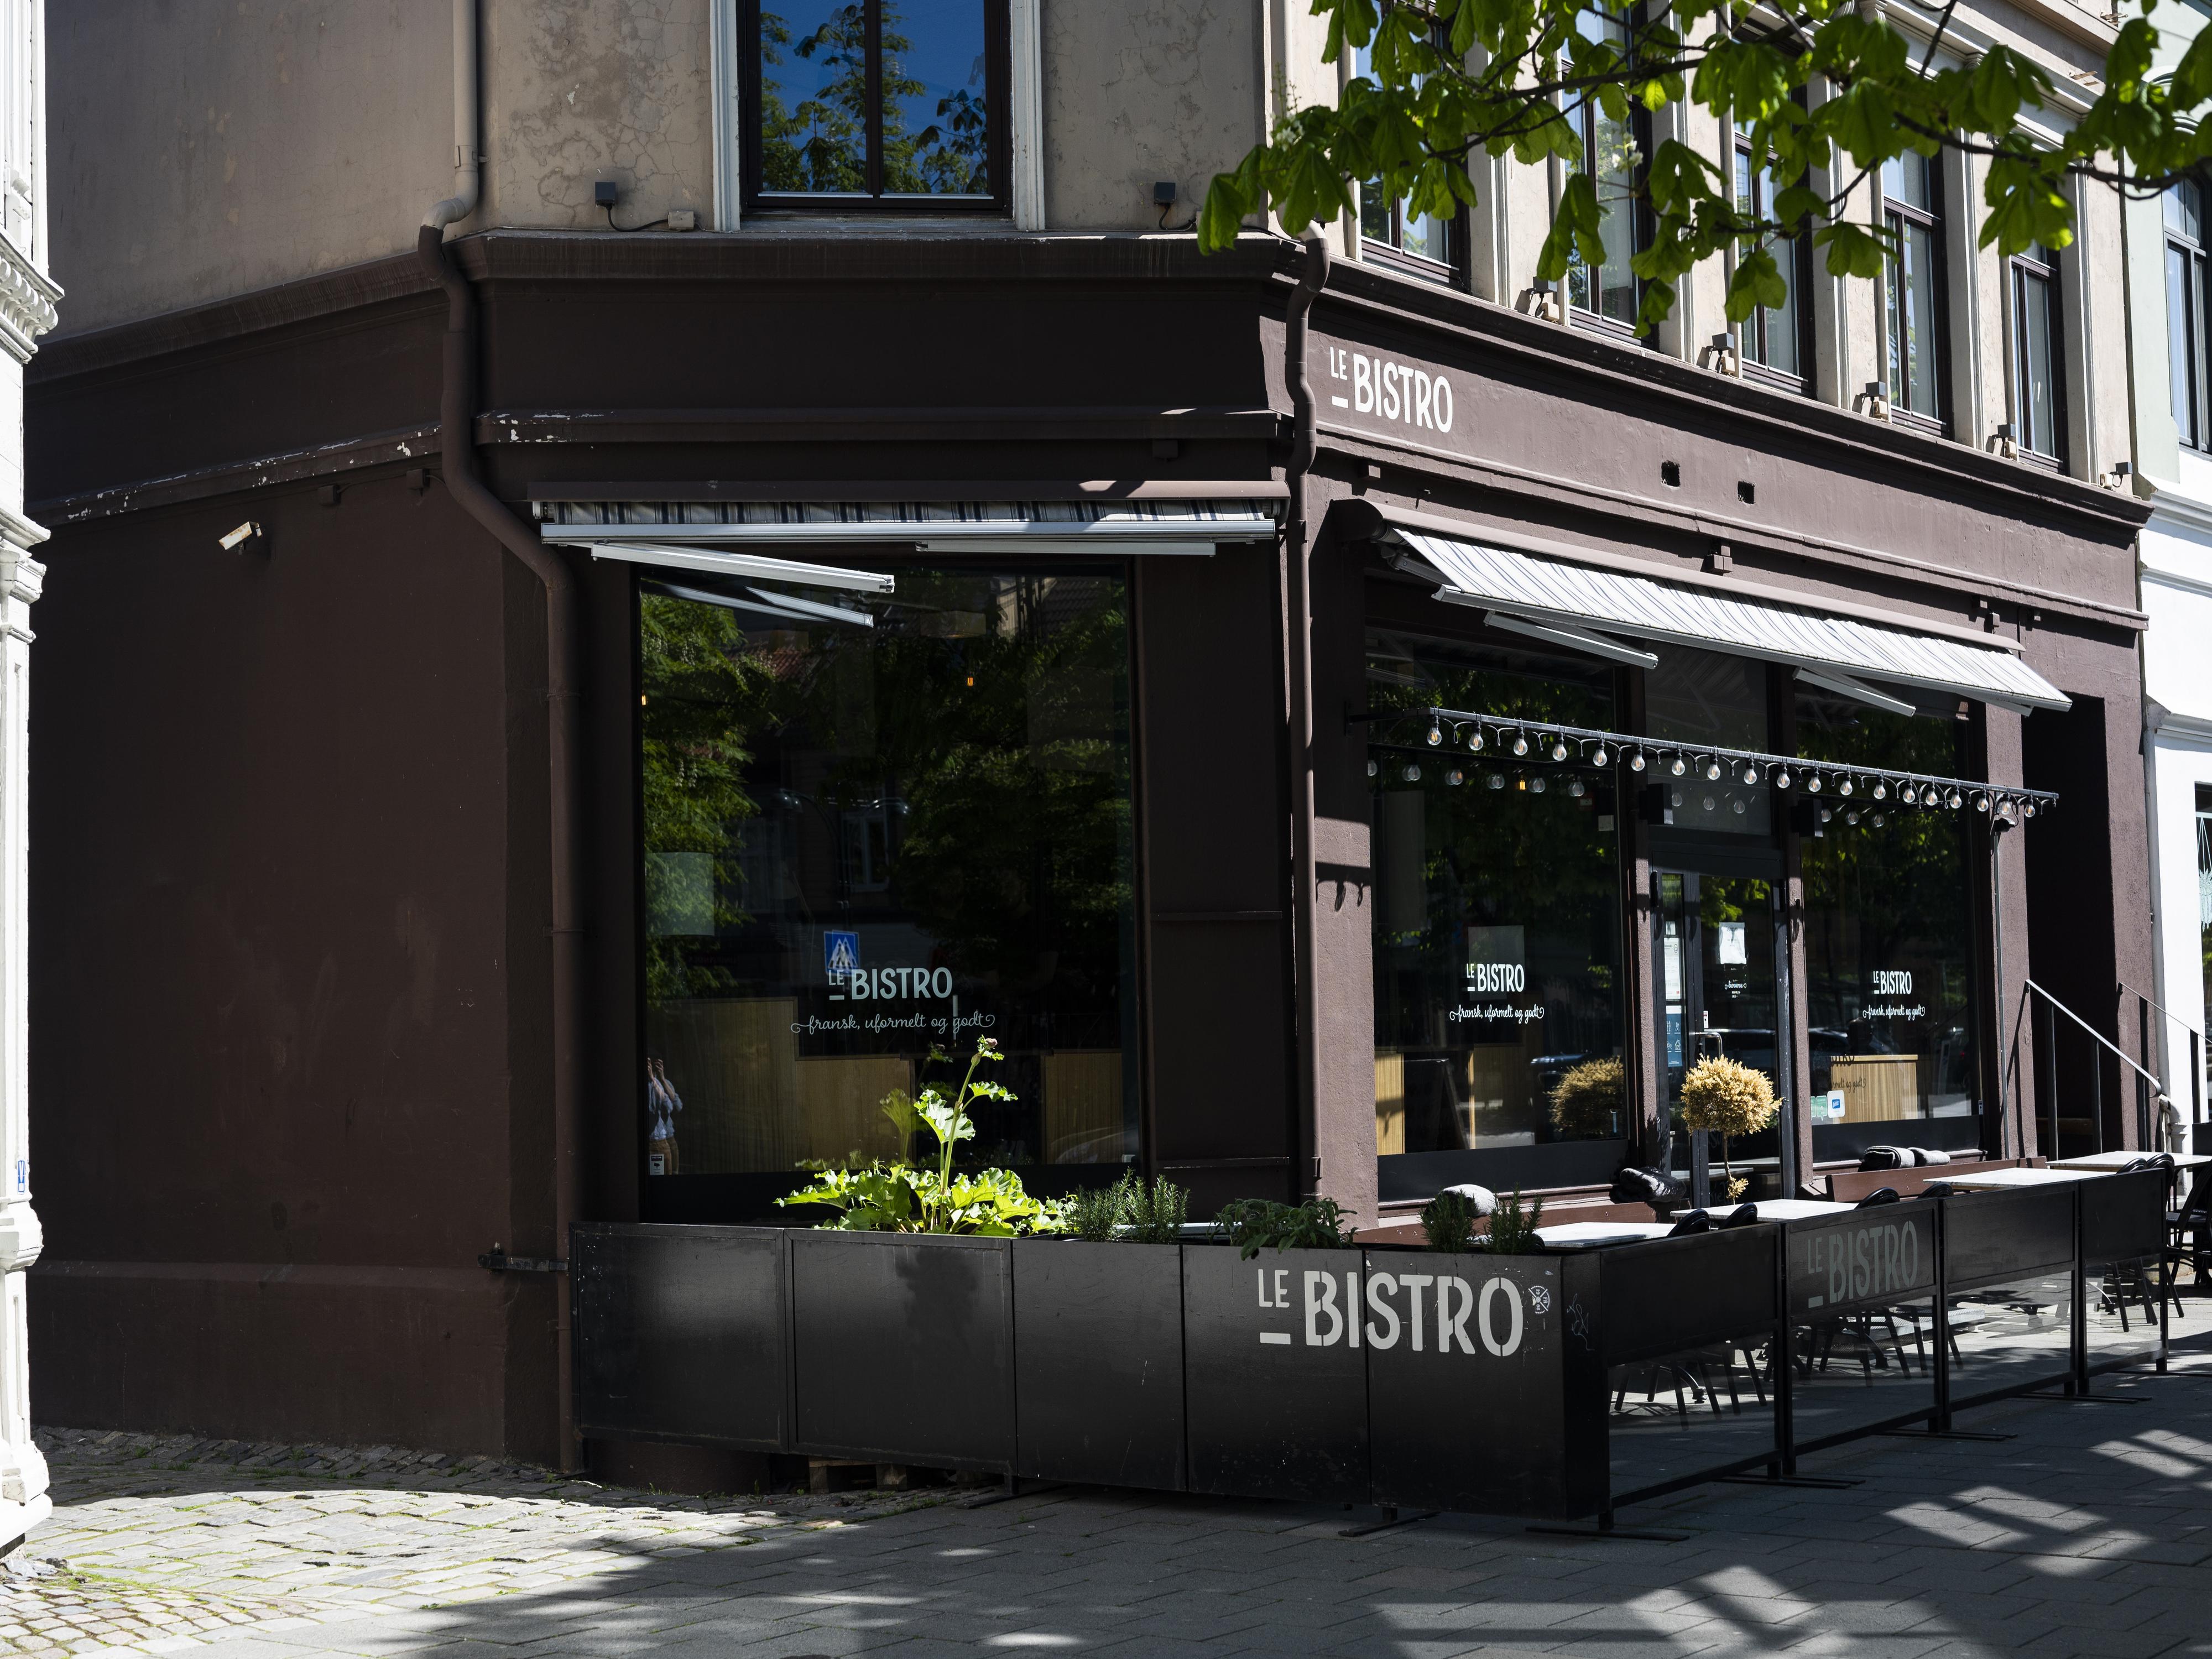 Restaurantanmeldelse av Le Bistro: God bistro